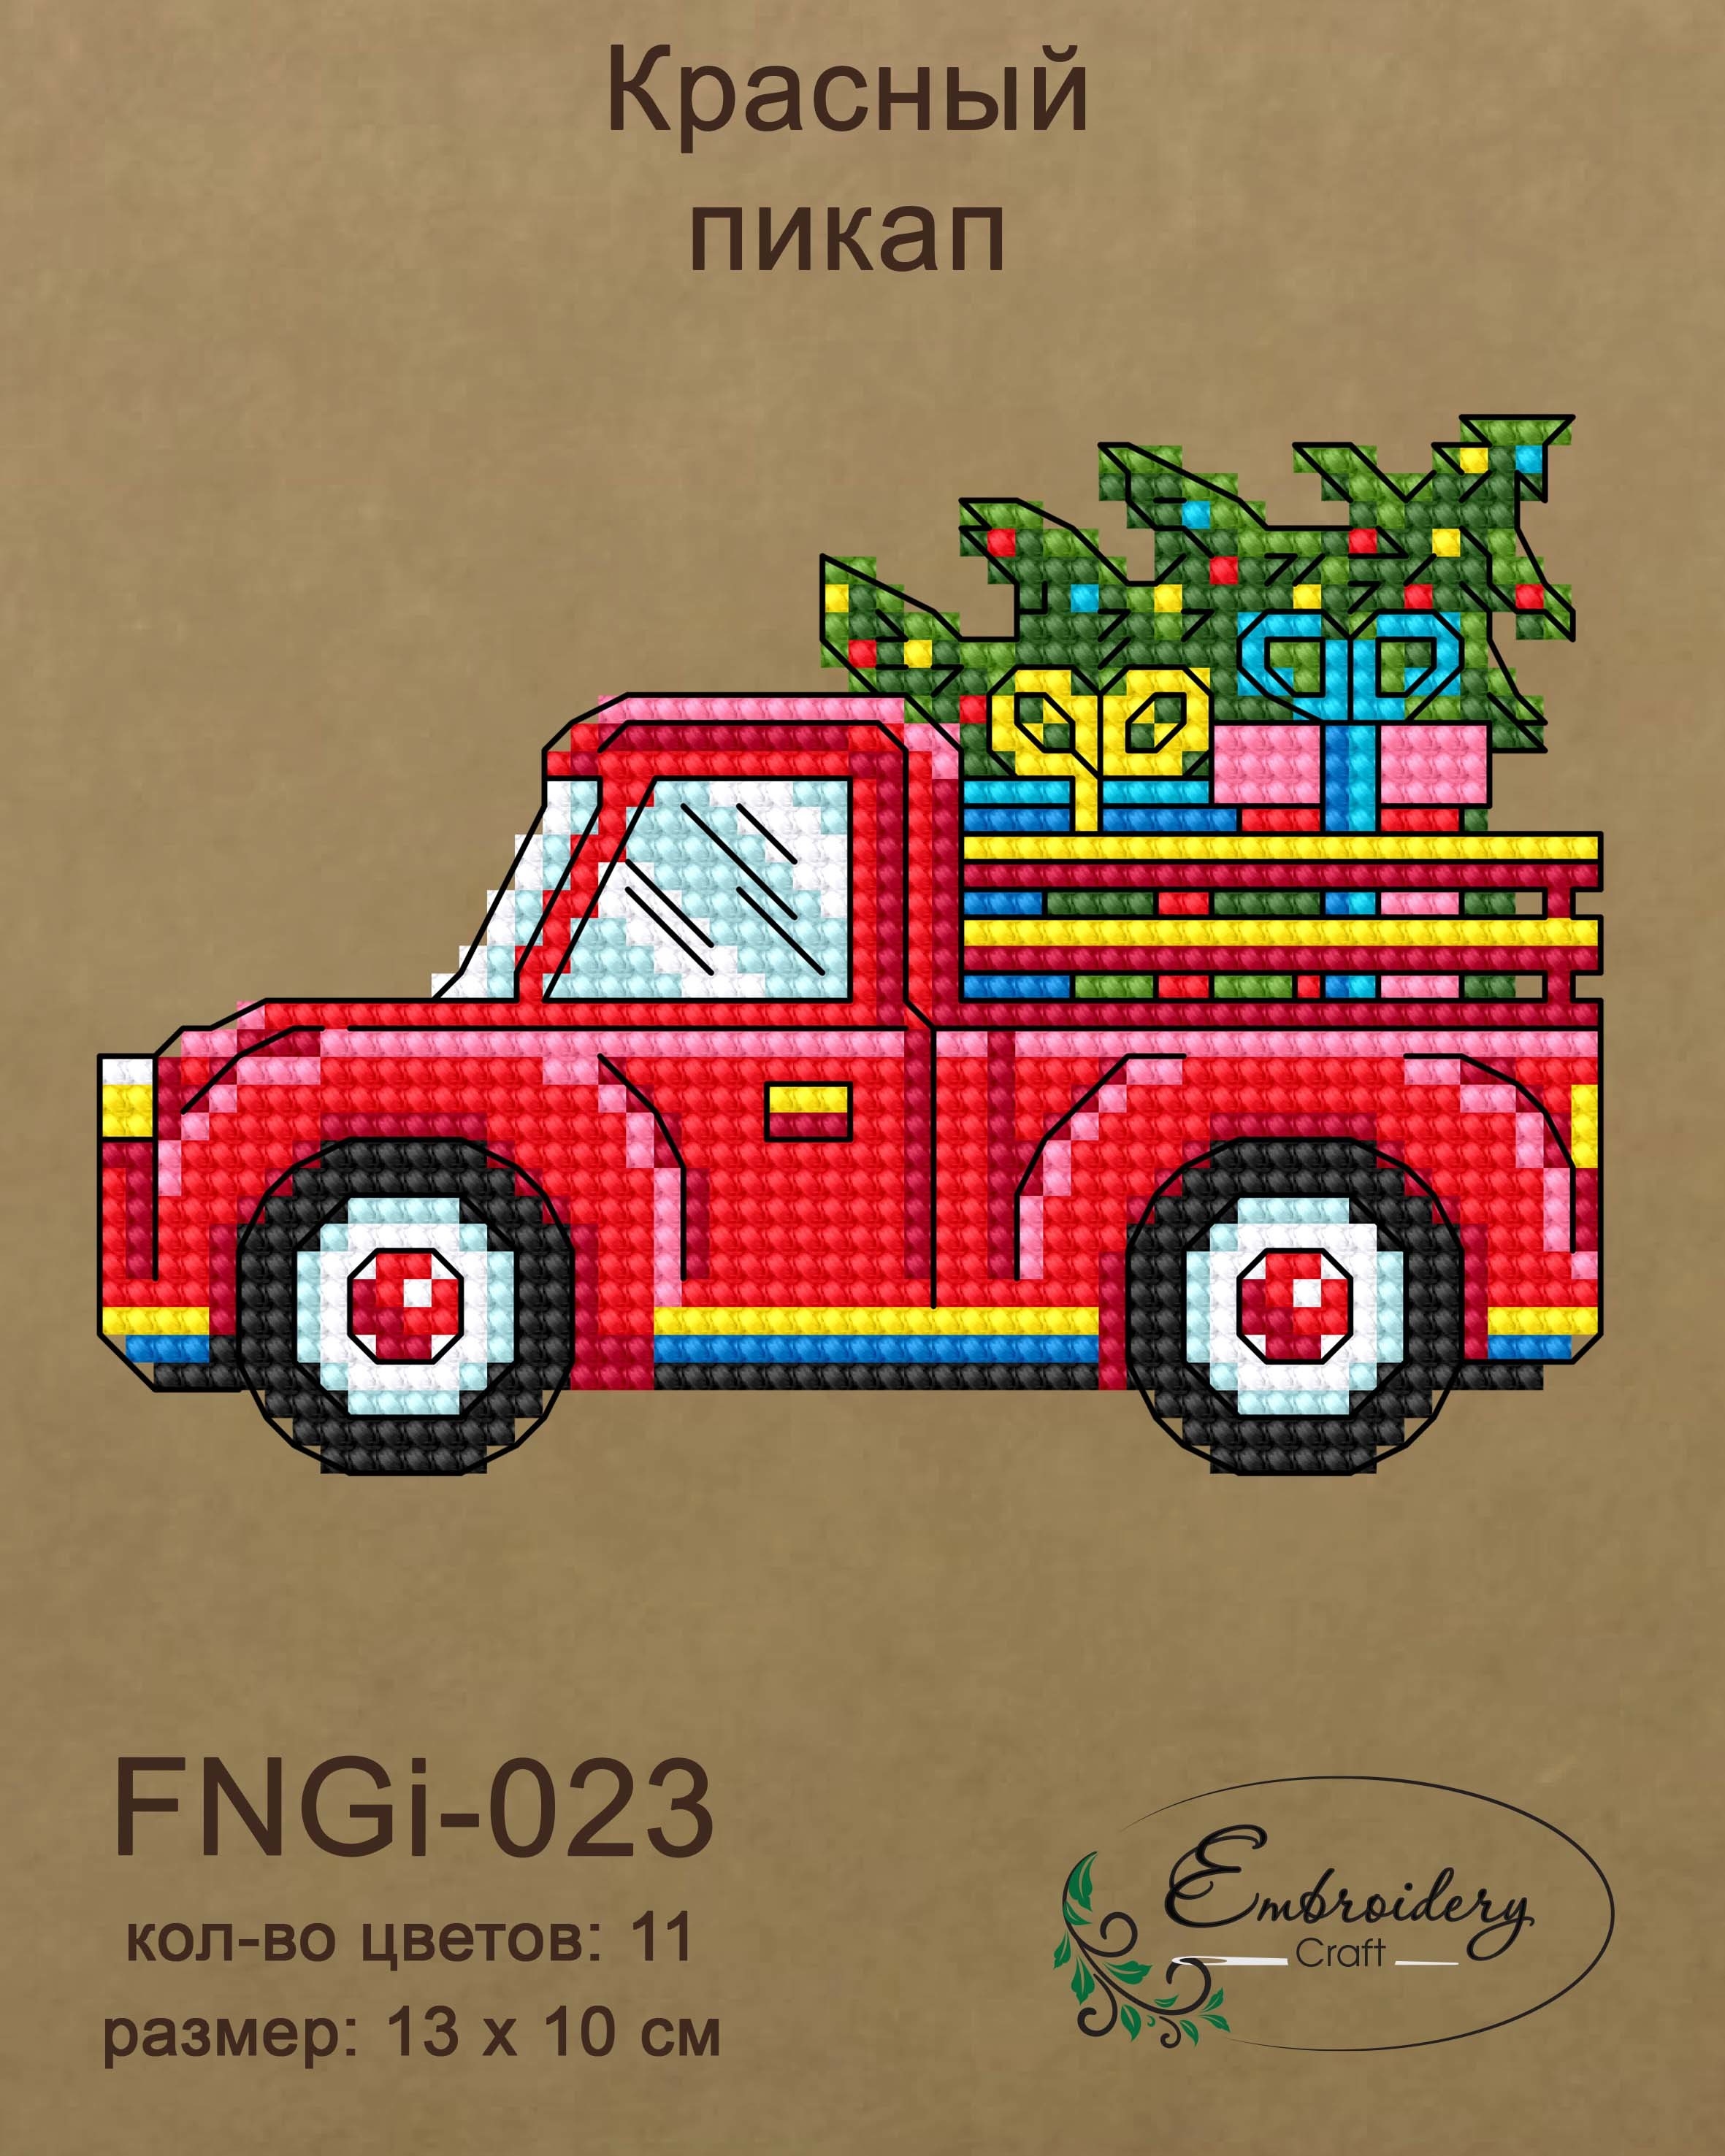 FNNGi-023 Красный пикап